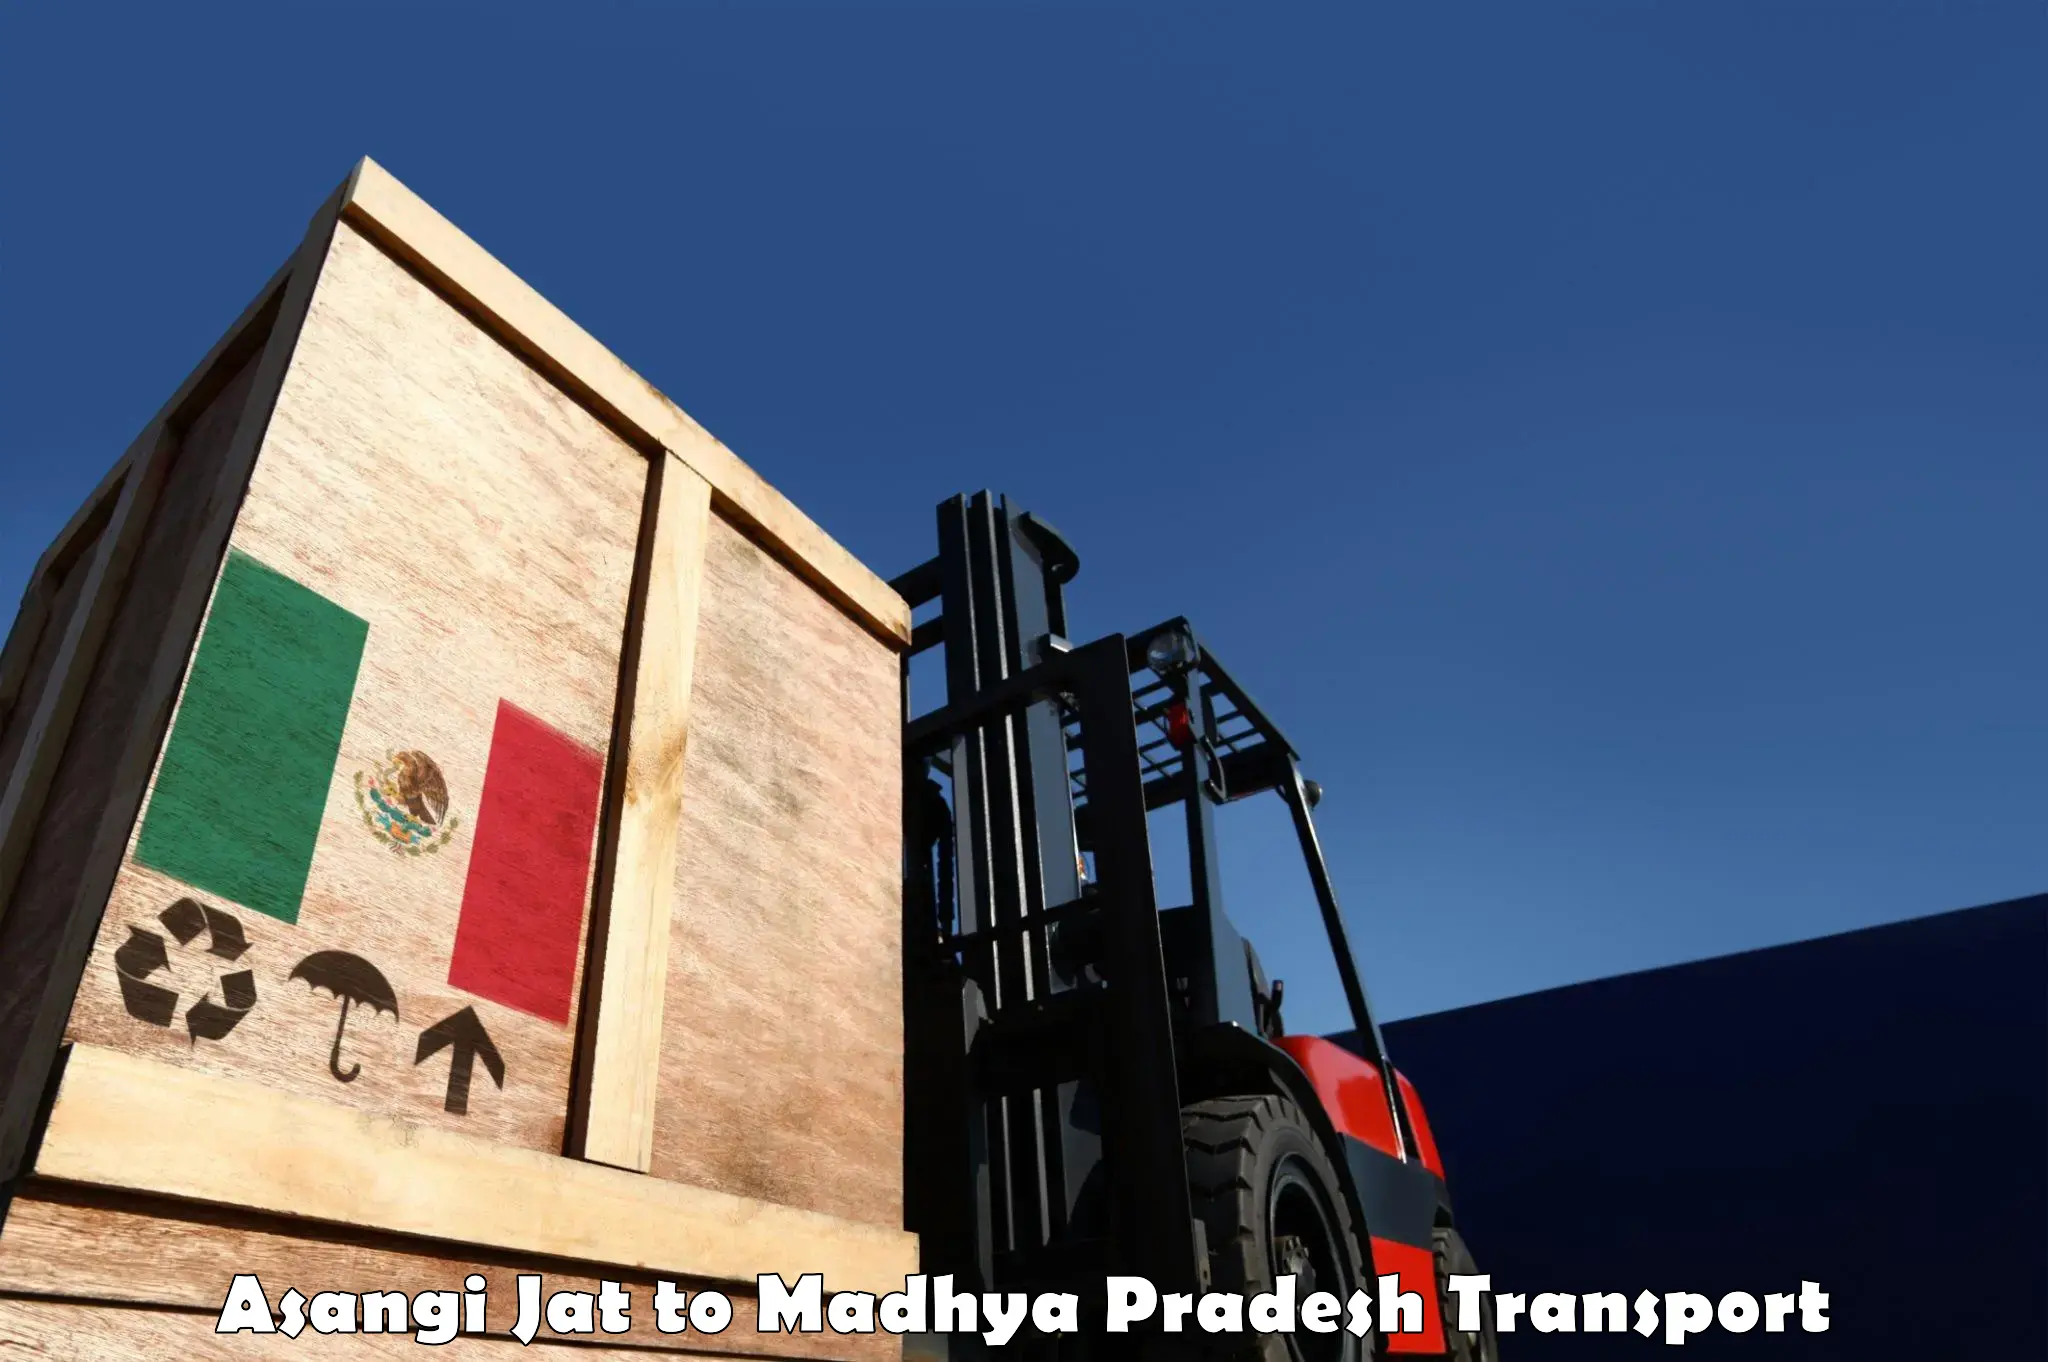 Truck transport companies in India Asangi Jat to Tikamgarh